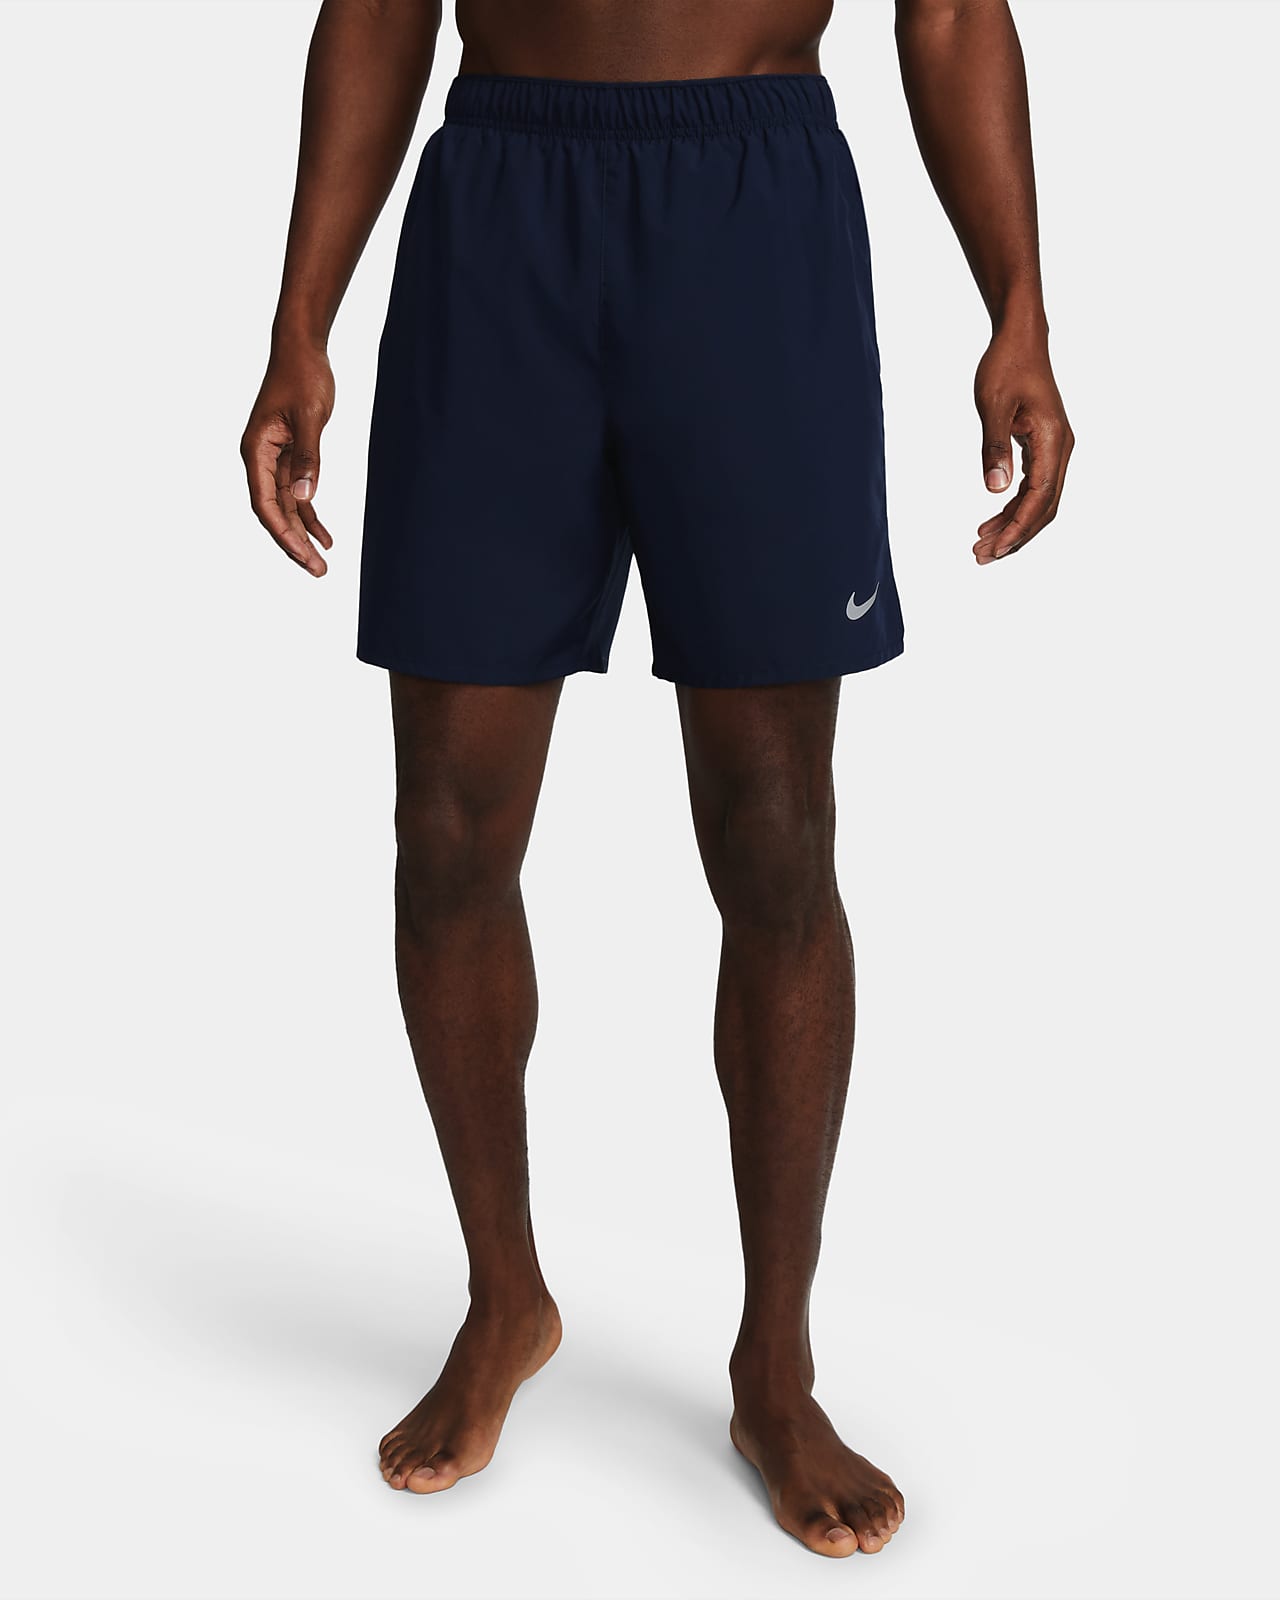 Shorts de running con forro de ropa interior Dri-FIT de 18 cm para hombre Nike Challenger